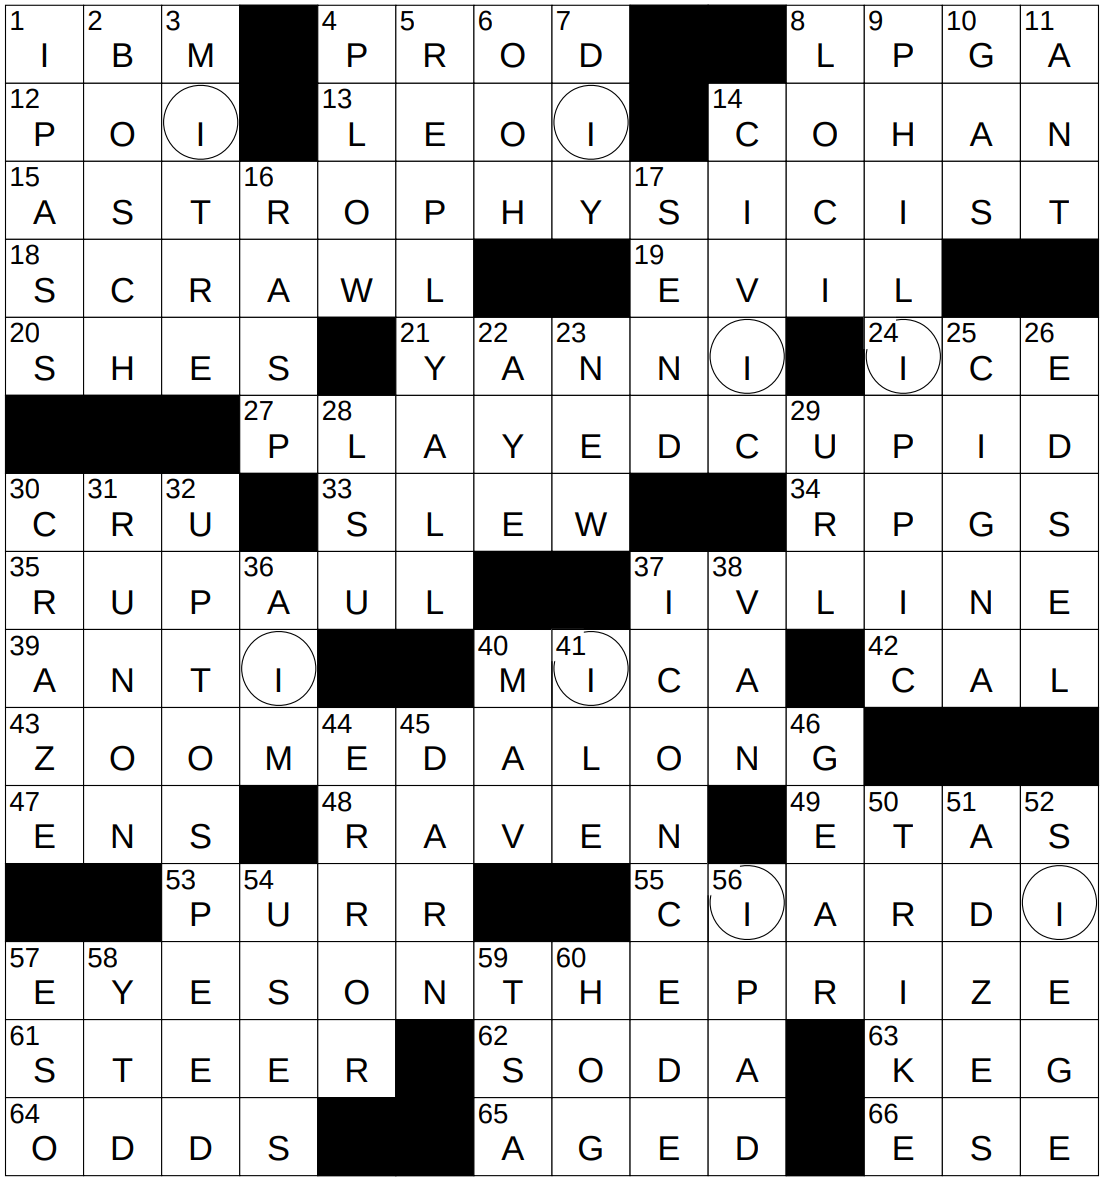 1004 22 NY Times Crossword 4 Oct 22 Tuesday NYXCrossword com